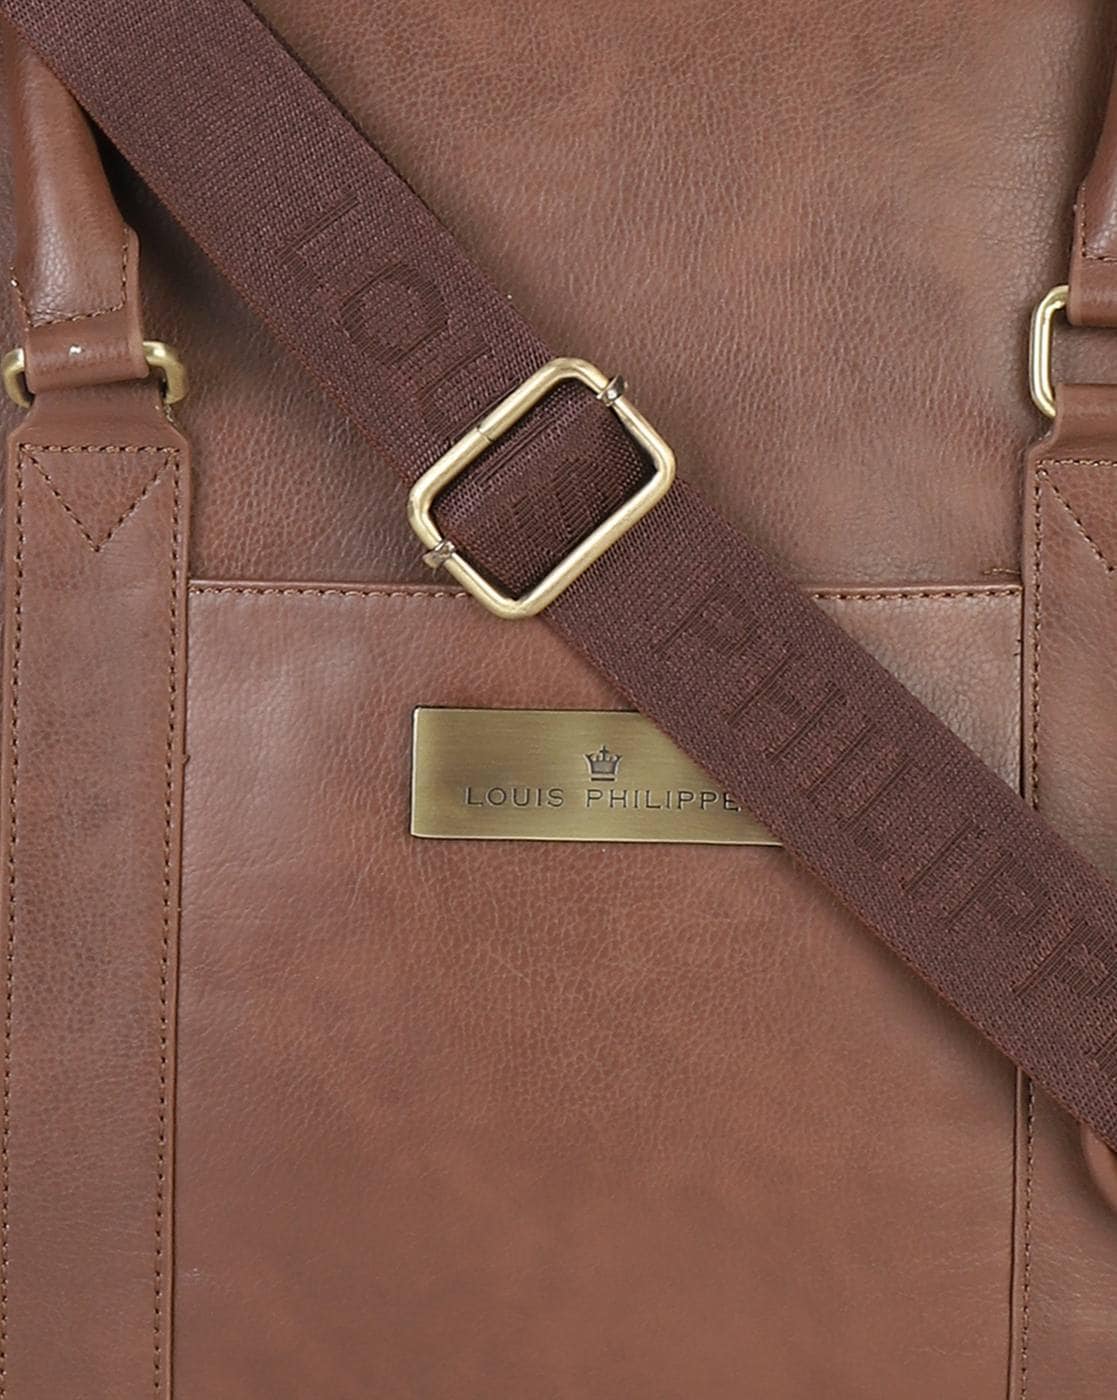 Buy Louis Philippe Bags & Handbags online - Men - 312 products